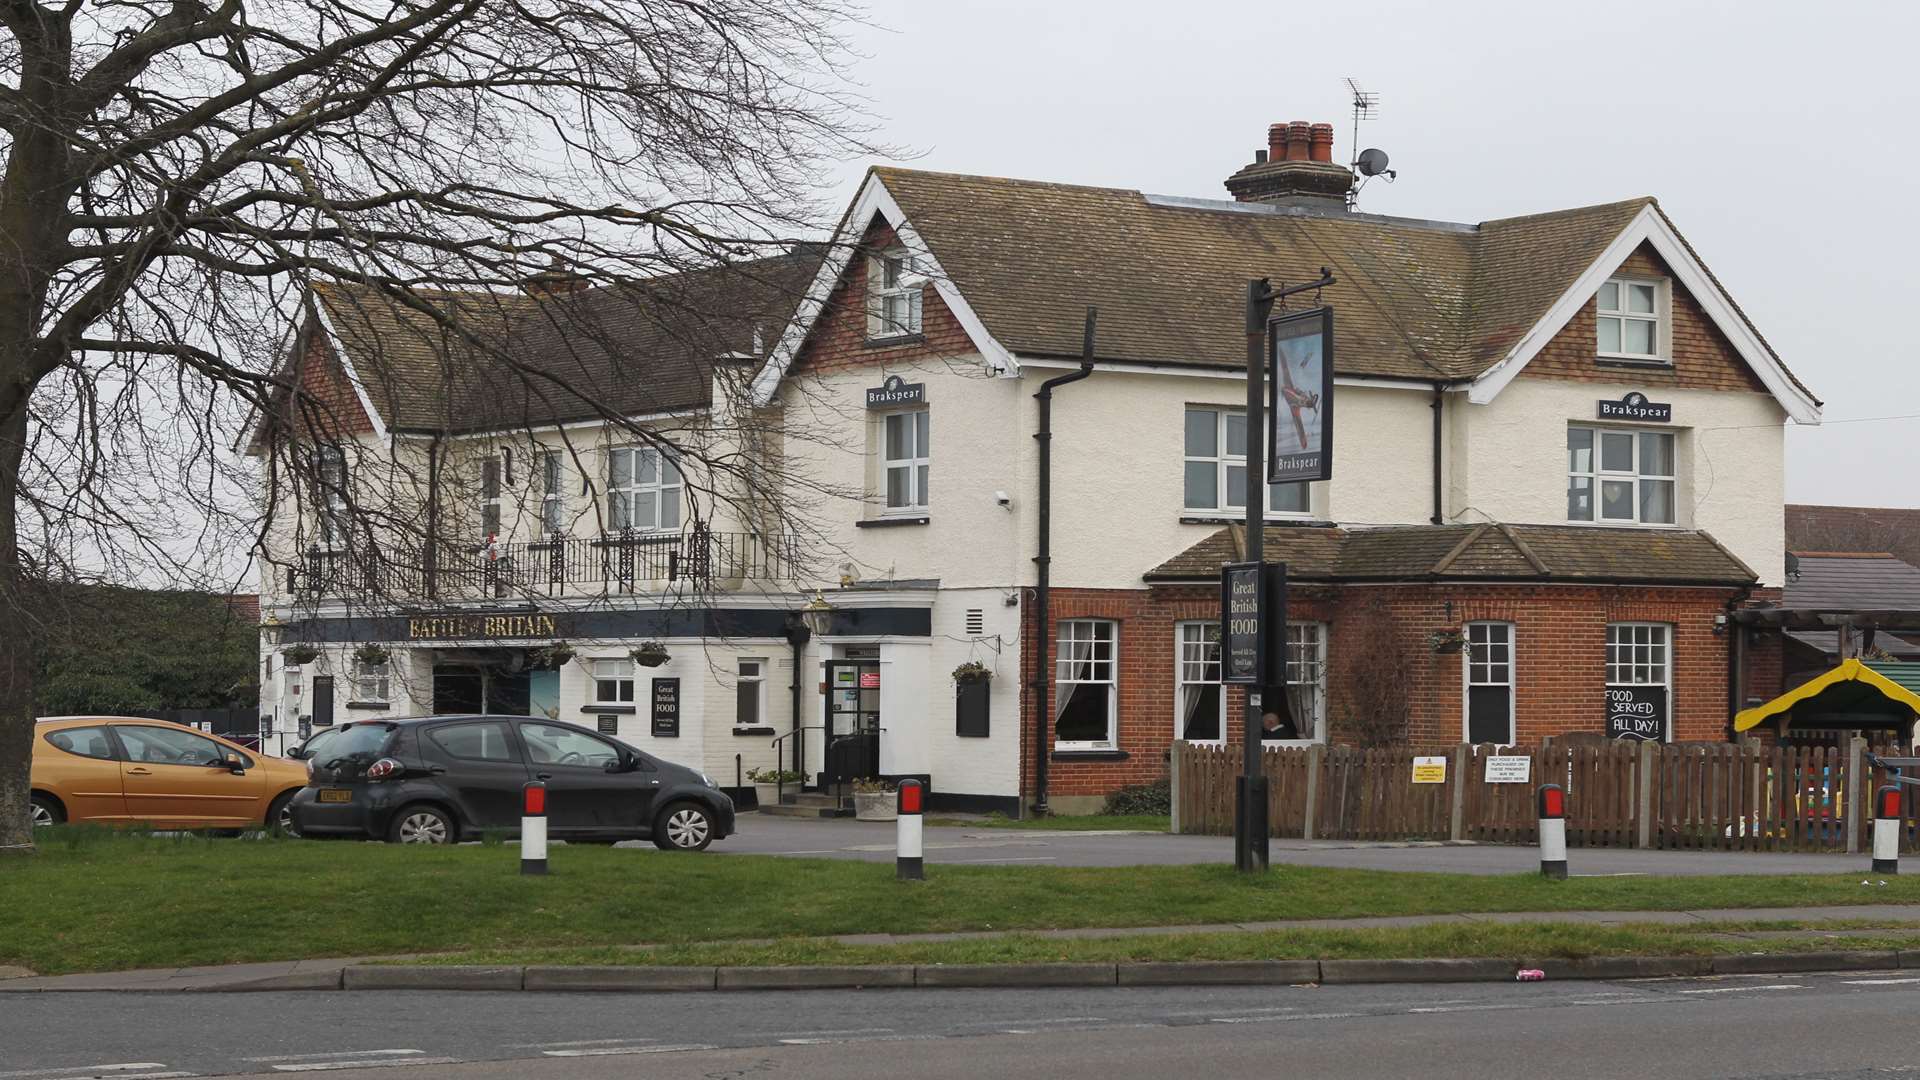 The Battle of Britain pub in Gravesend before demolition began.